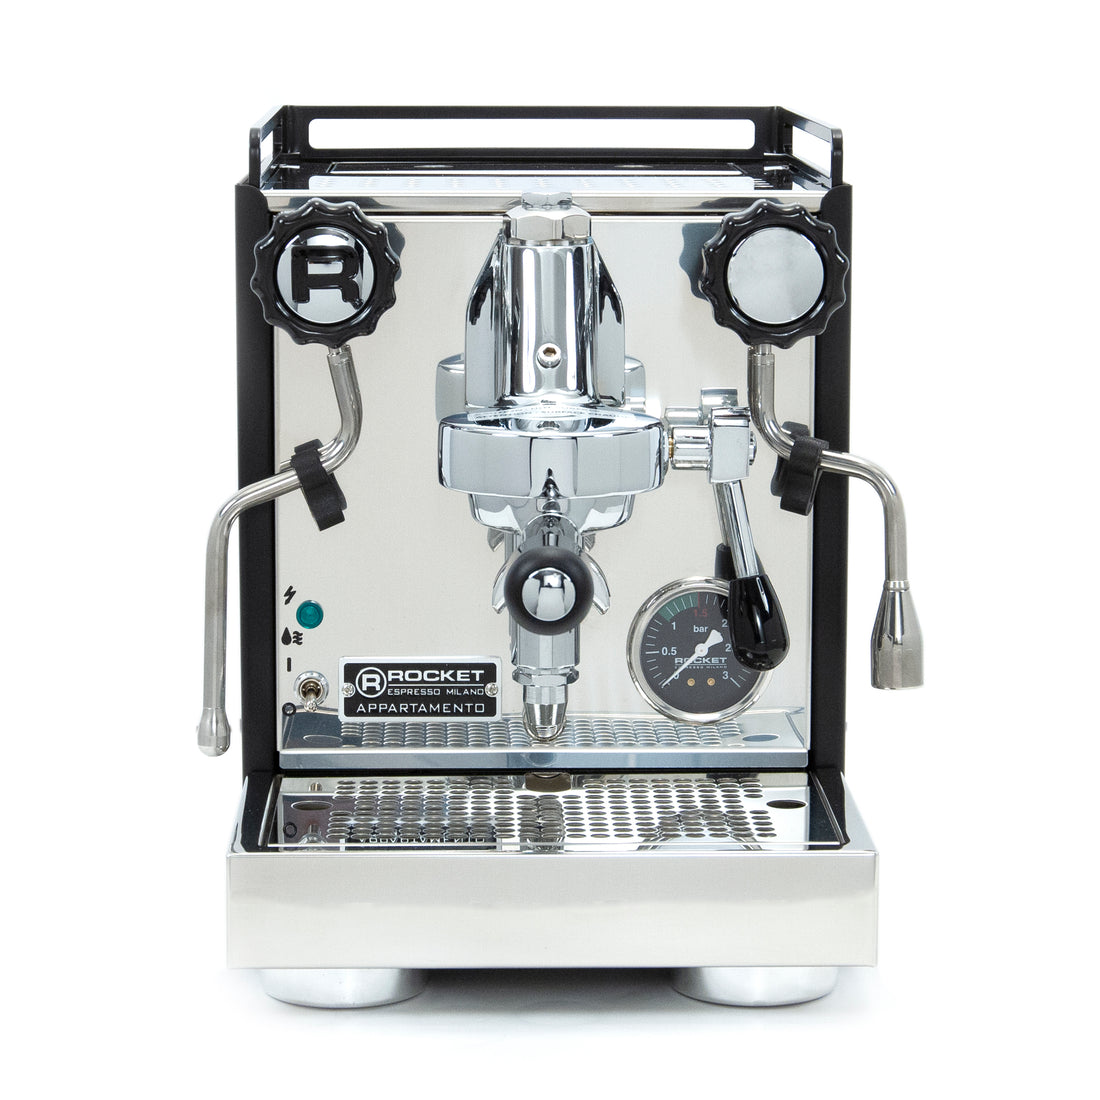 Rocket Espresso Appartamento Serie Nera Espresso Machine - Wenge Quarter Cut